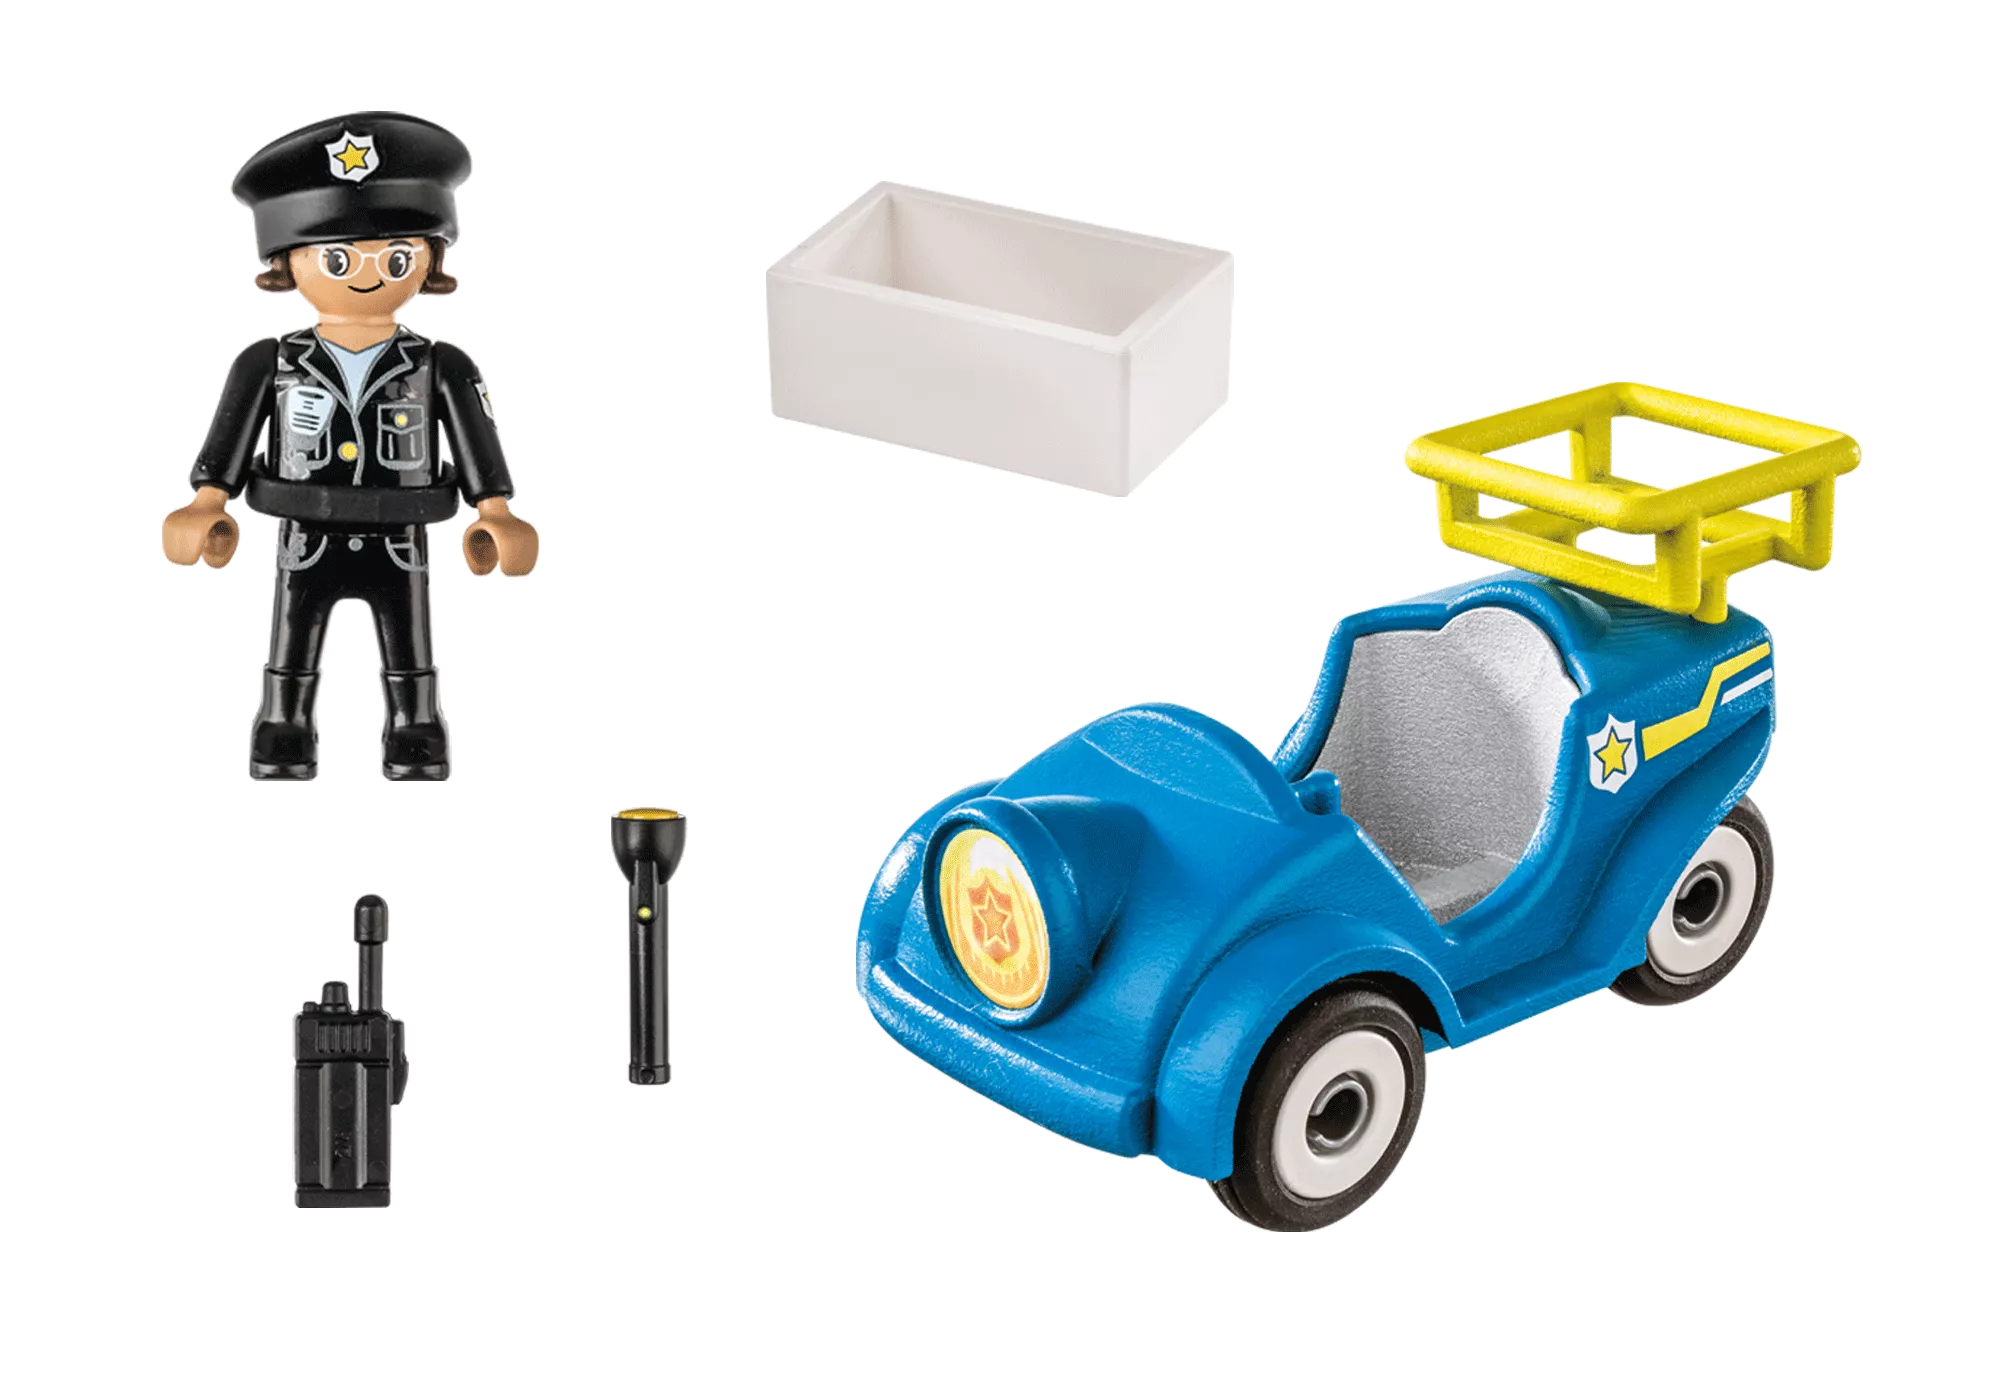 PLAYMOBIL 70829 DUCK ON CALL - Mini-Auto Polizei